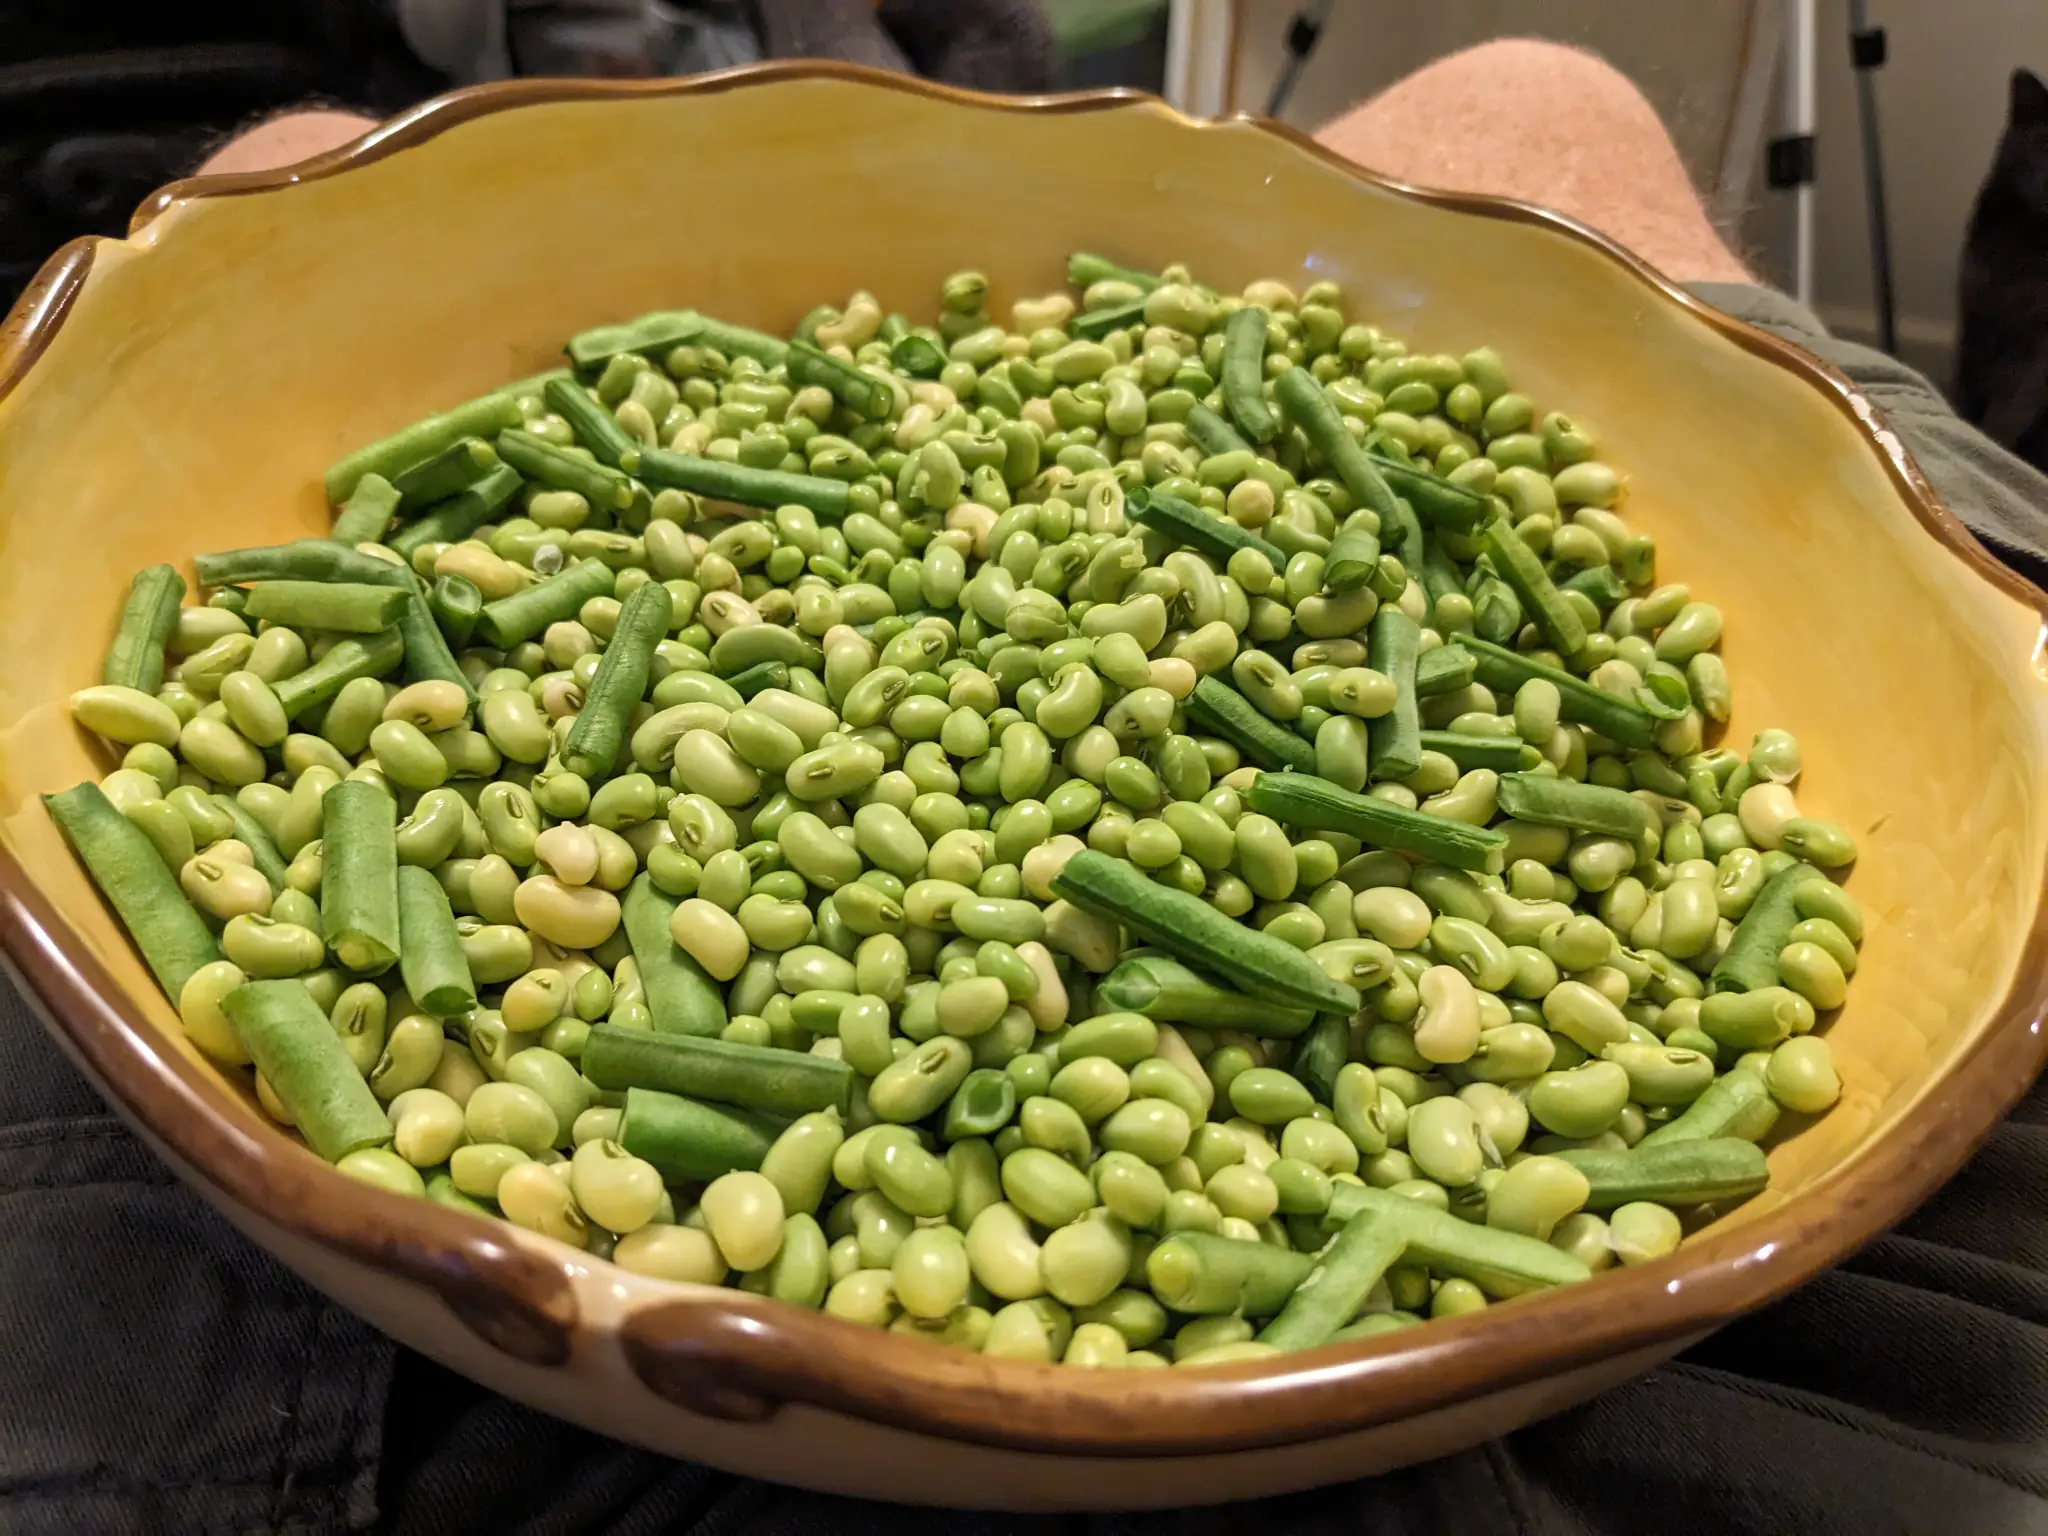 A bowl of shelled Texas Cream 40 peas.